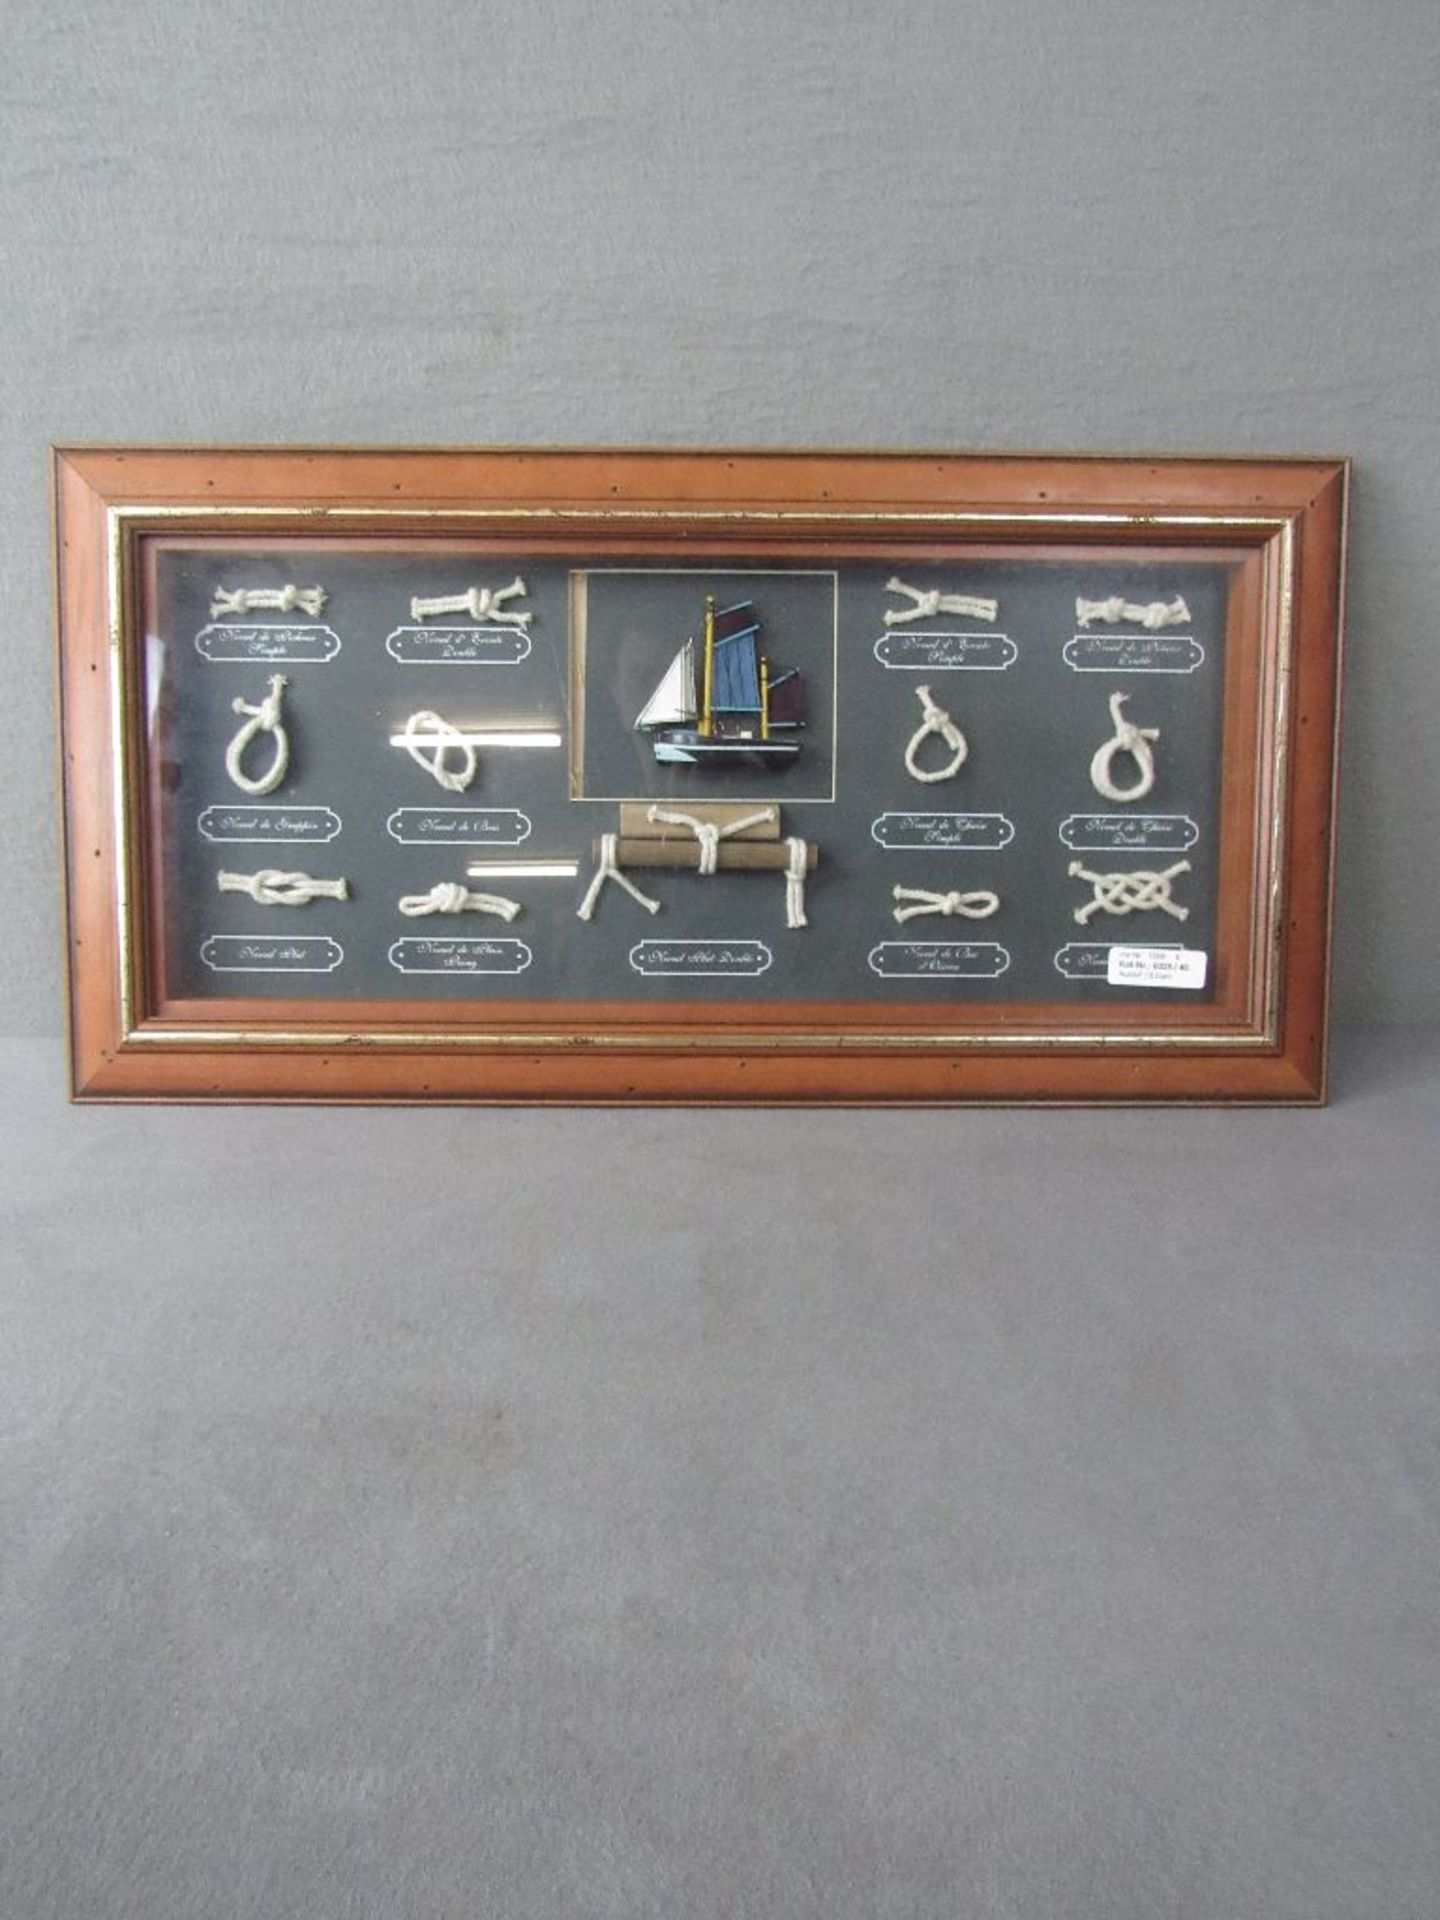 Diorama hinter Glas diverse Knoten maritim 65x33cm